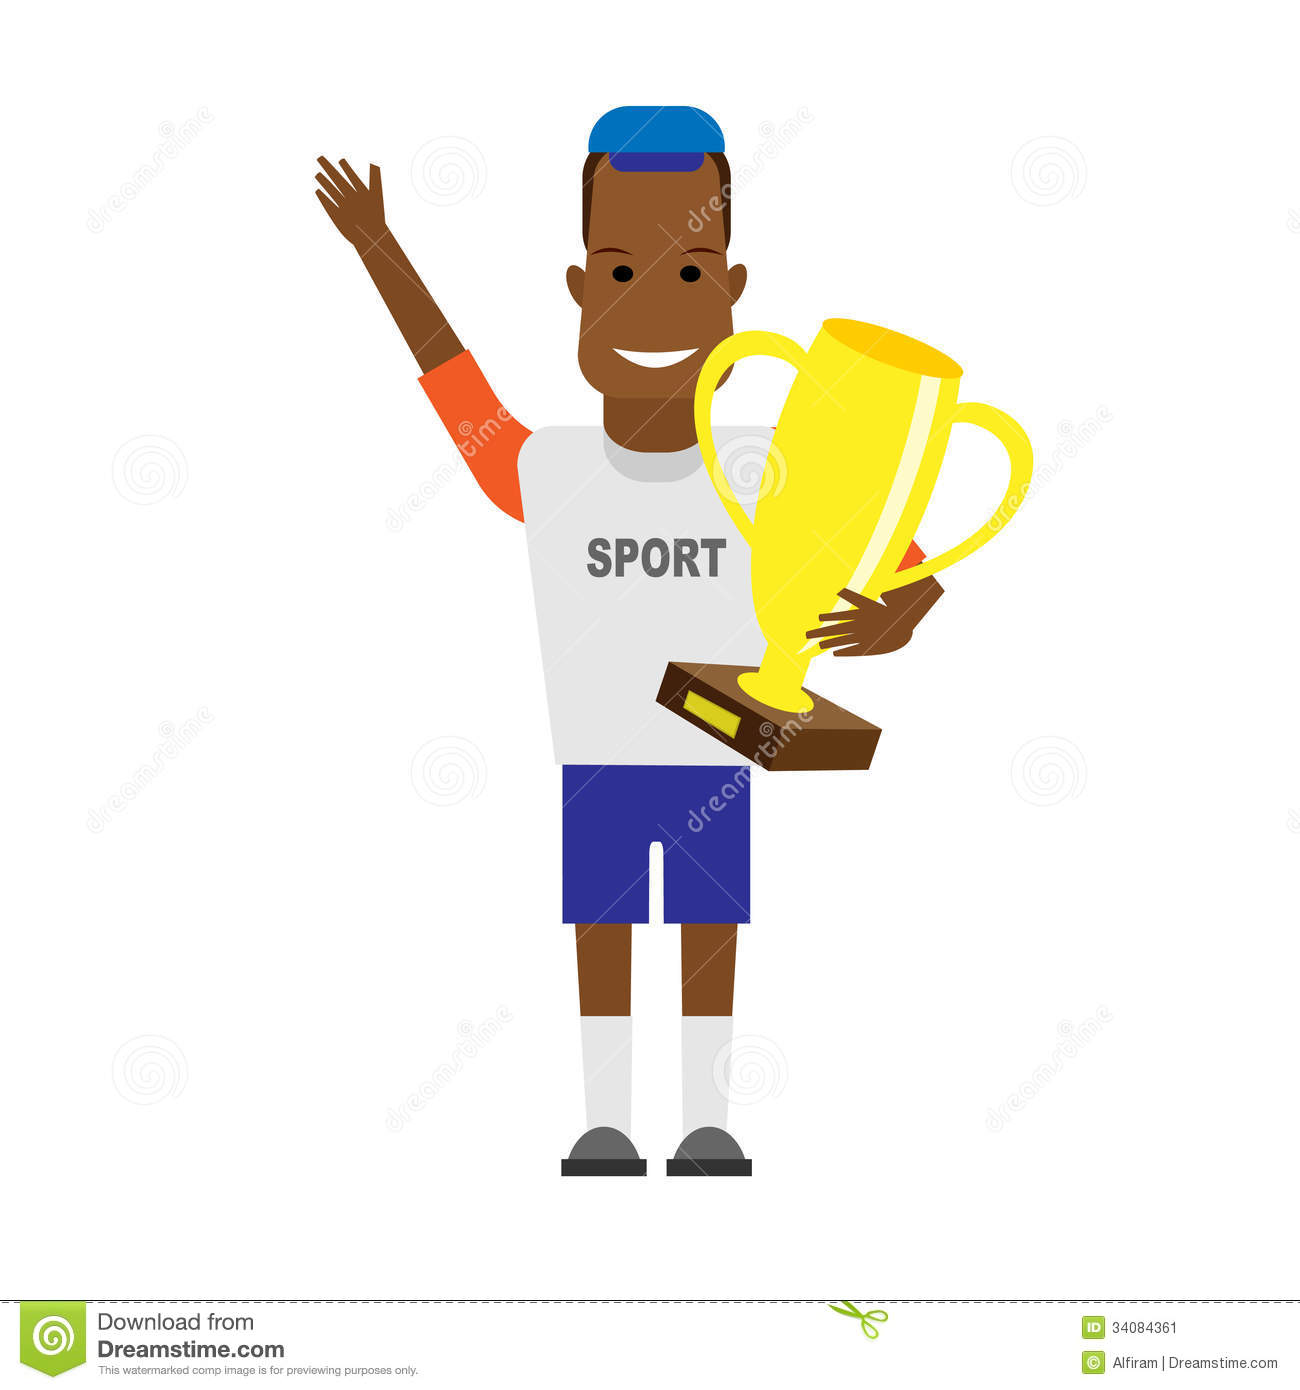 Black Sportsman Winner Stock Image   Image  34084361